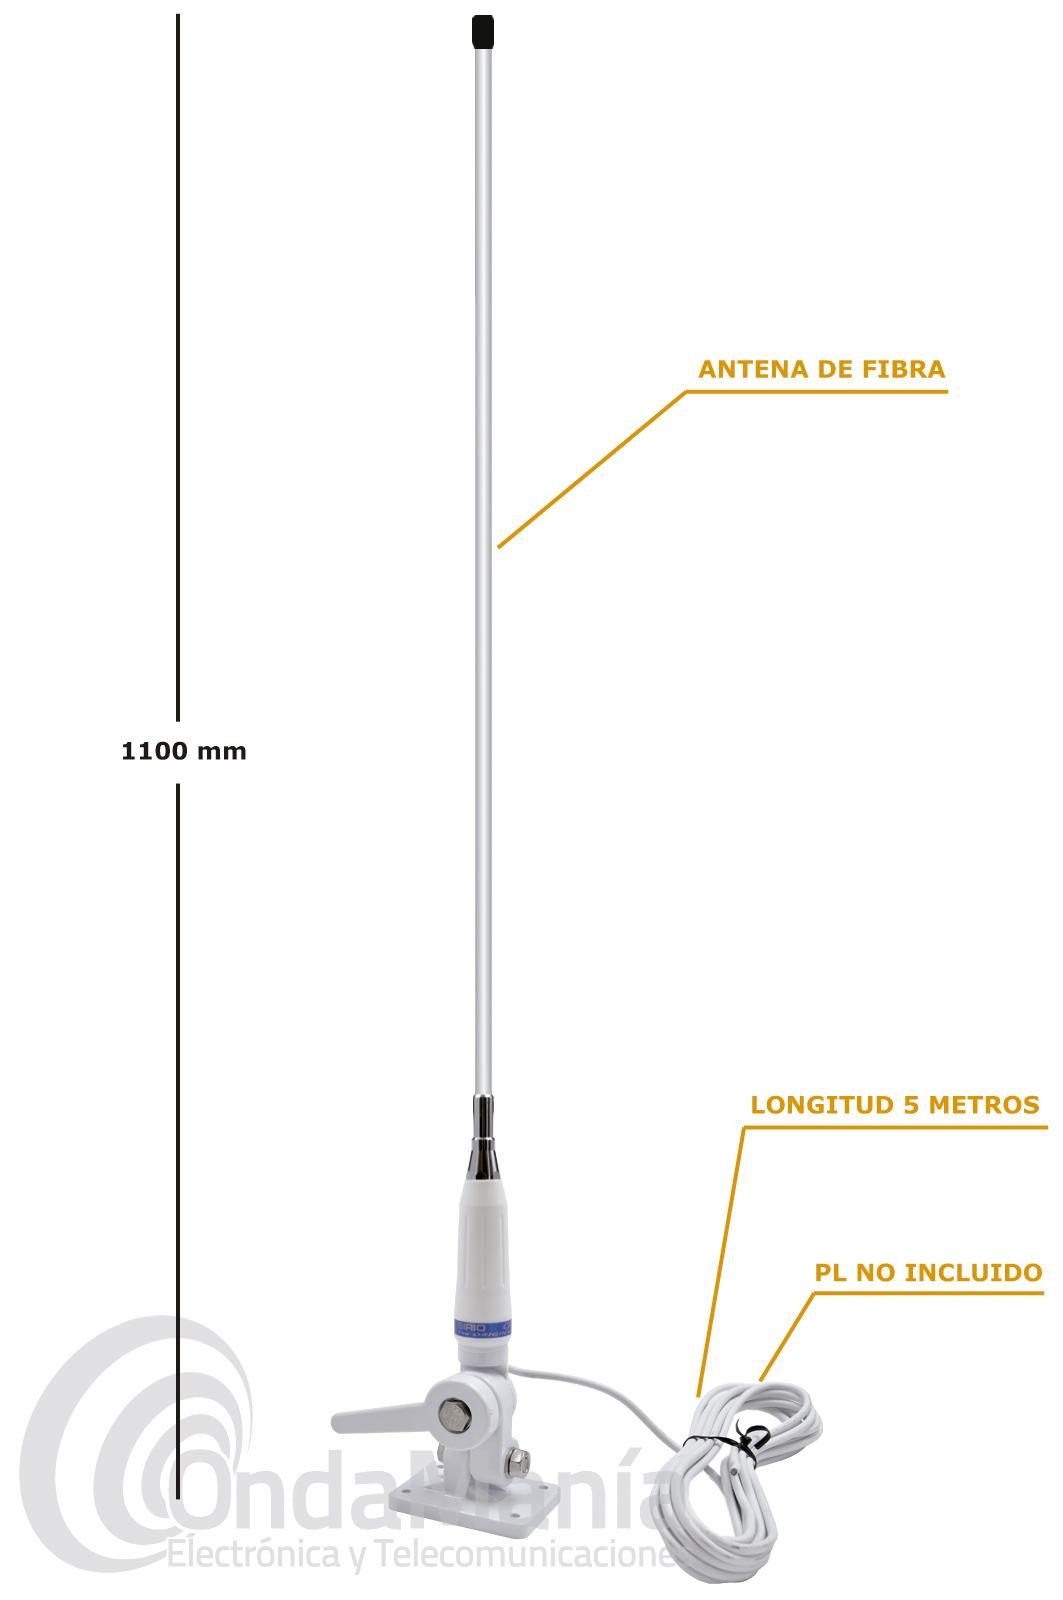 VHF antenna - SB series - Sirio Antenne - for boat / vertical